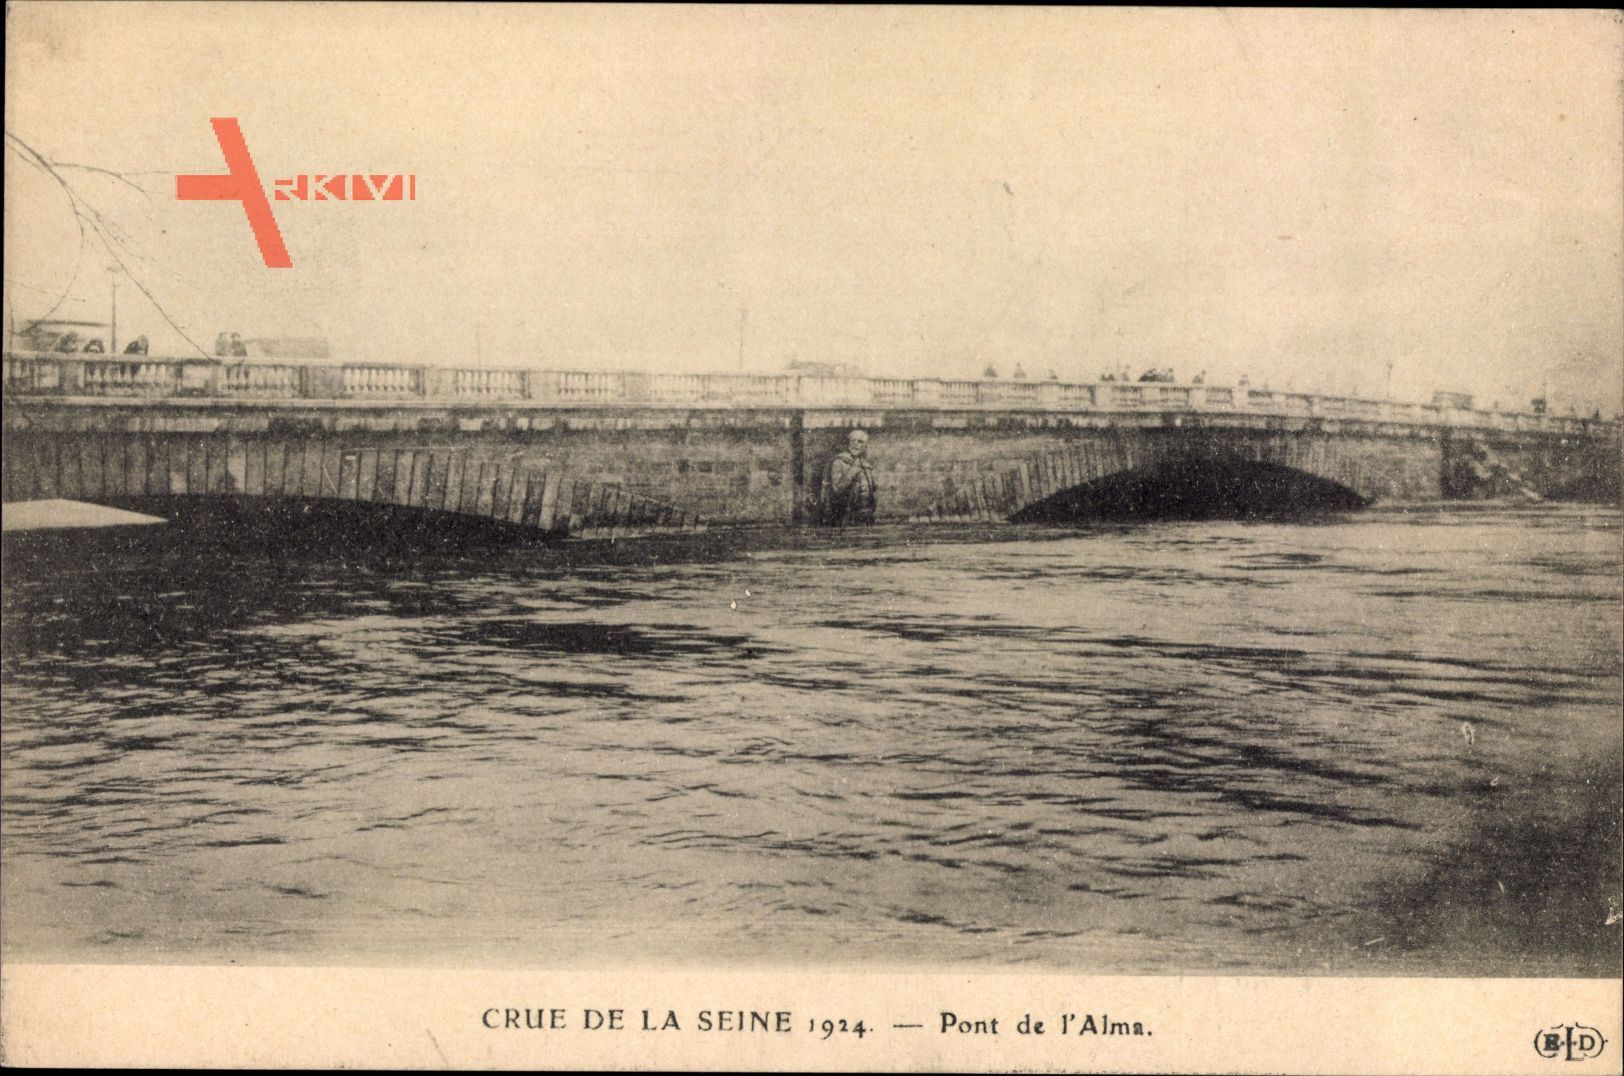 Paris, Crue de la Seine 1924, Pont de lAlma, Seinehochwasser, Brücke